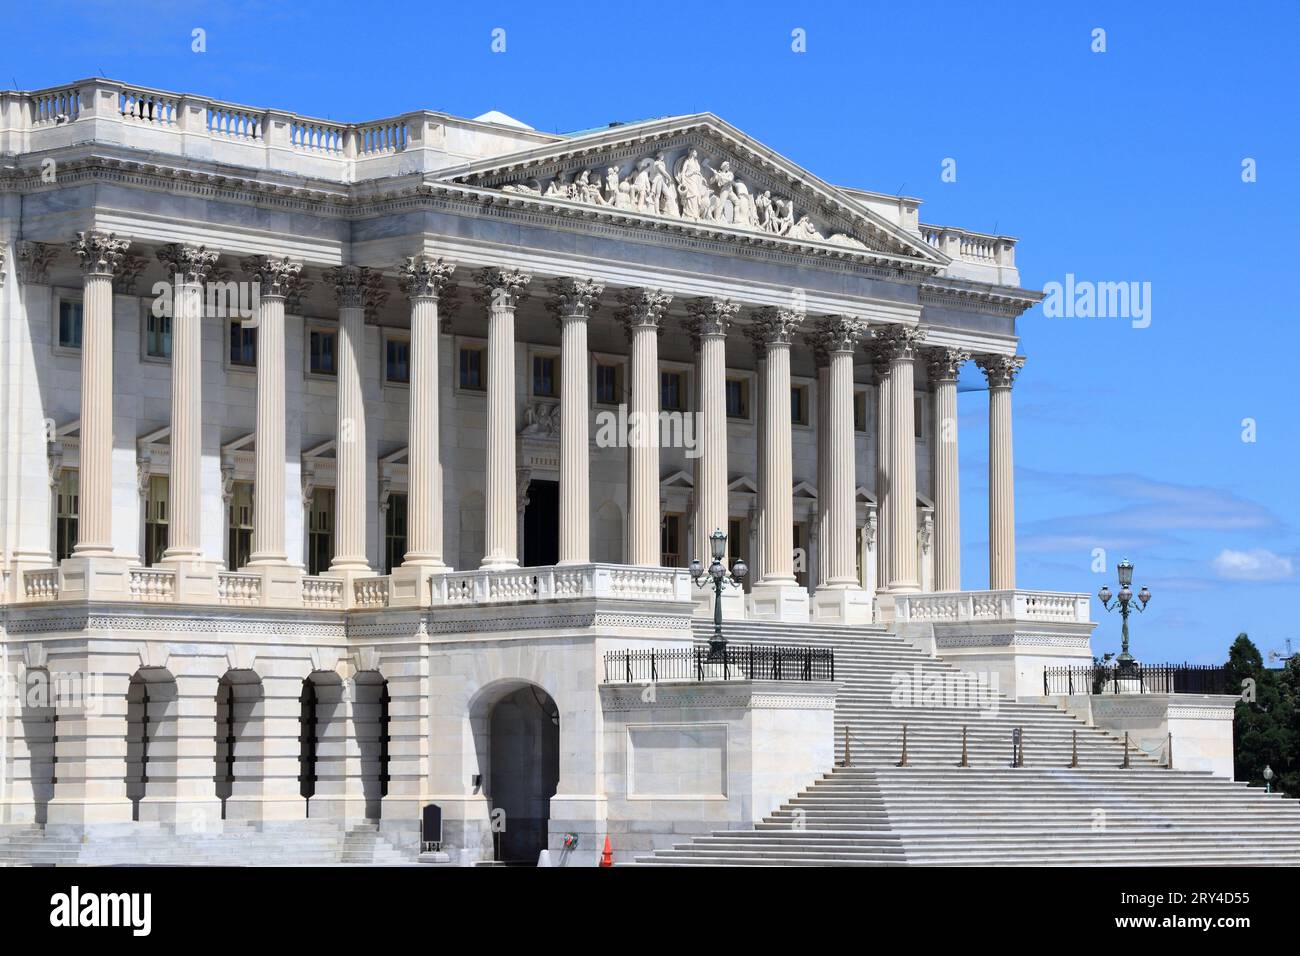 US National Capitol in Washington, DC. American landmark. United States Capitol - US Senate wing. Stock Photo